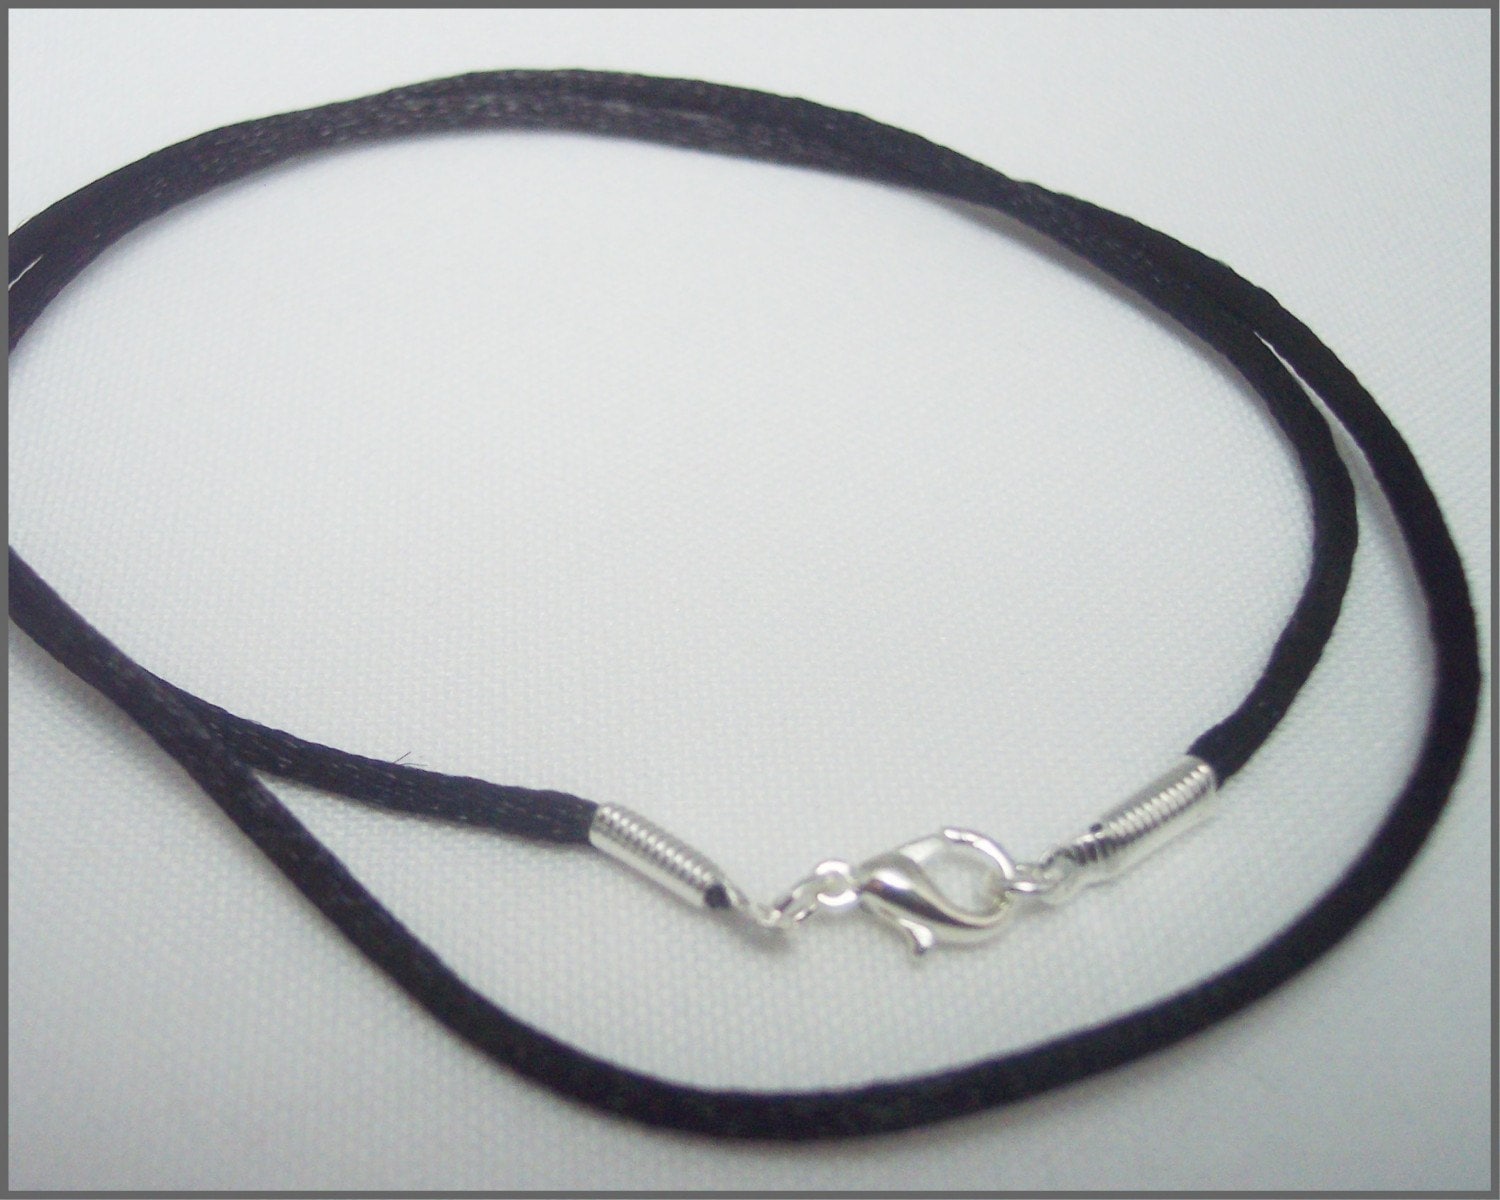 Wholesale Necklaces Necklace Cord Wax Cord Necklace Blanks 18 Inch  Necklaces BULK Necklaces 50pcs Black Cord Necklaces